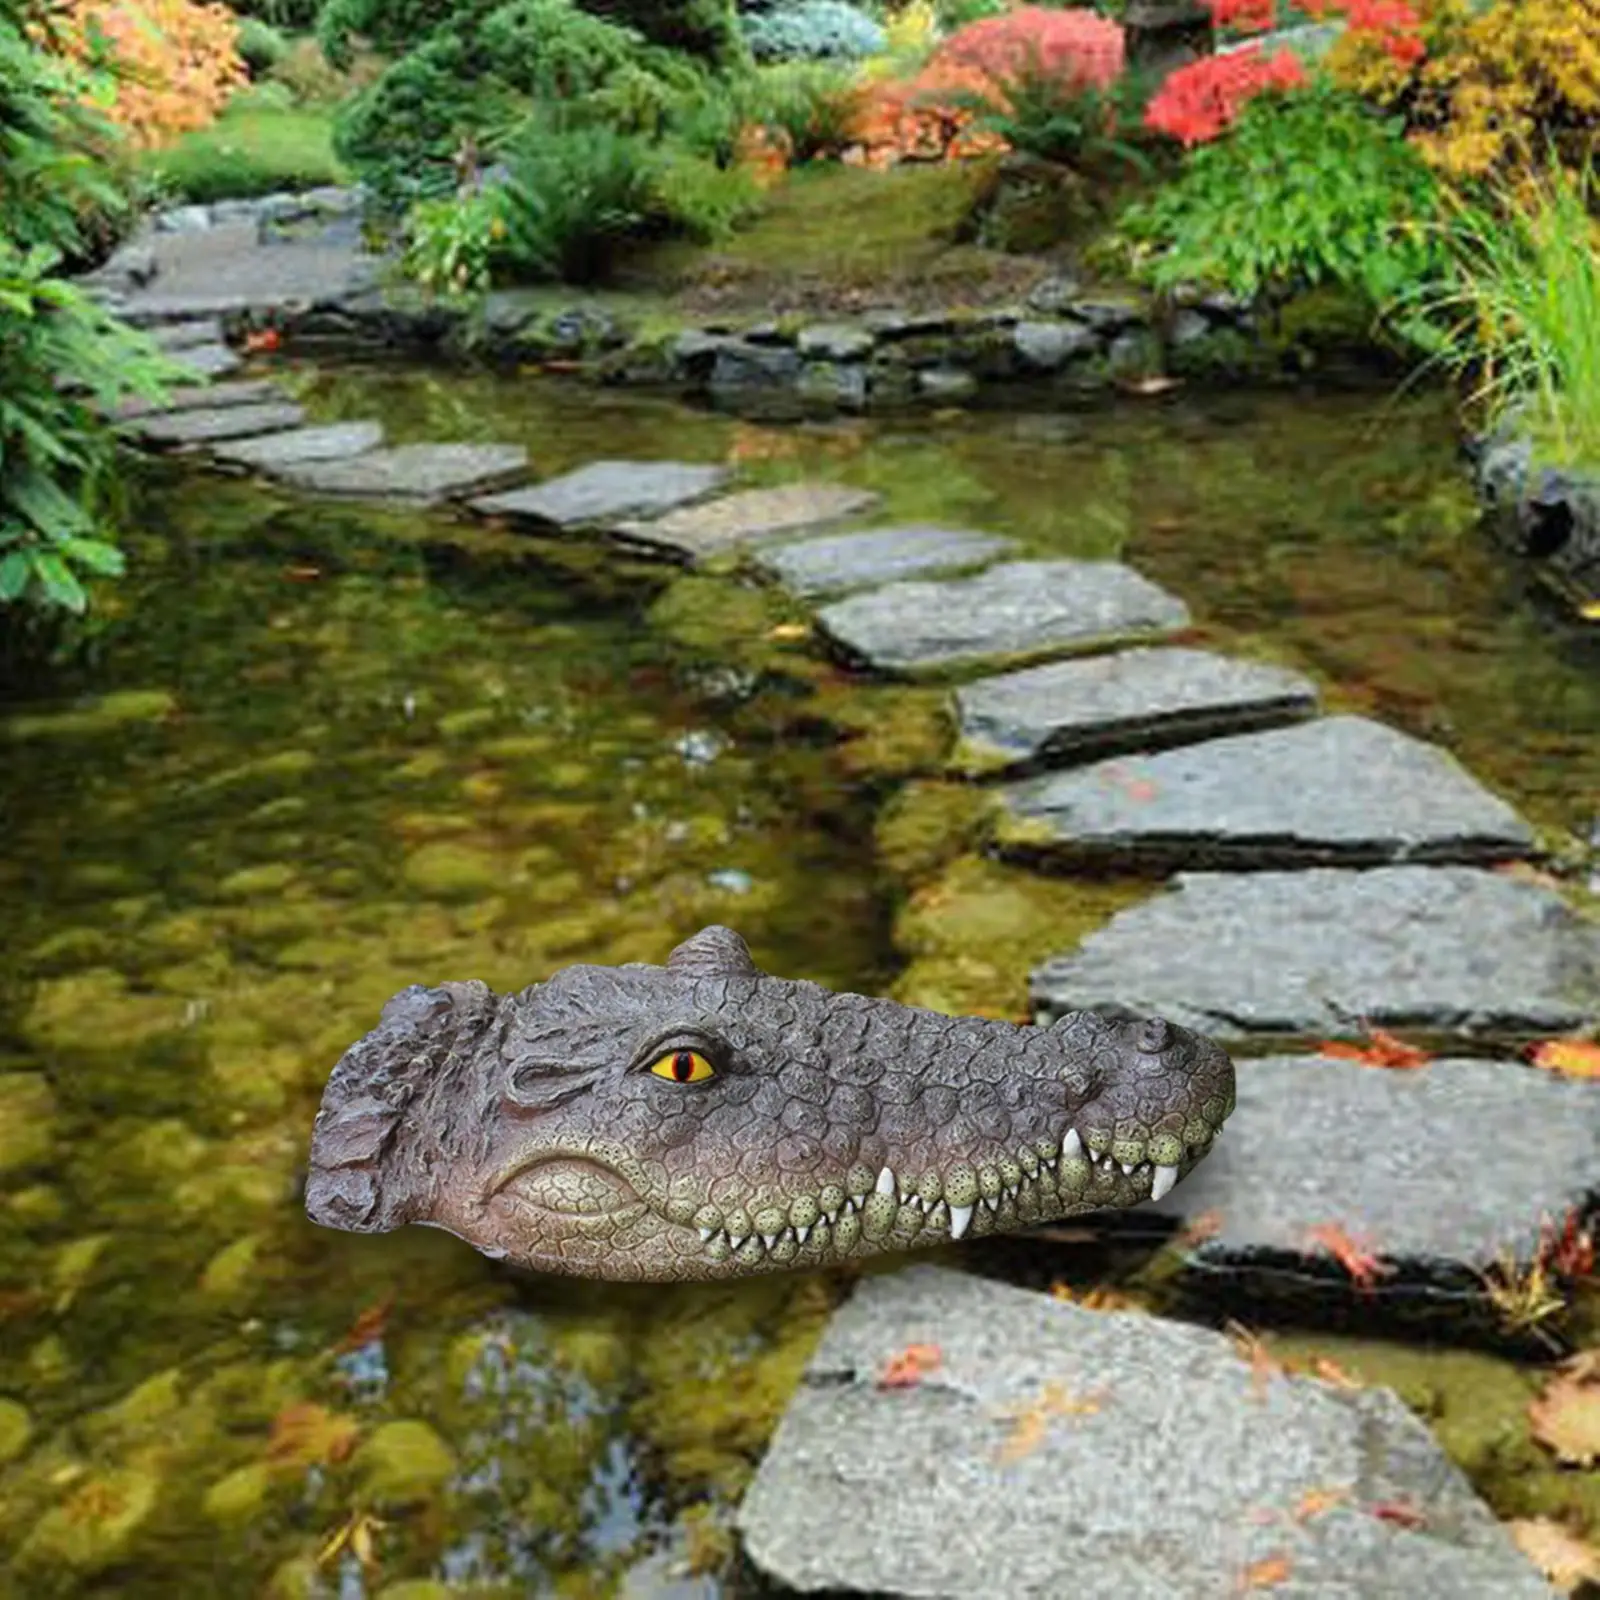 Simulation Floating Crocodile Head Deterrent Ducks Water Decoy Prank Toy Gator Head for Pond Patio Garden Ornament Decoration